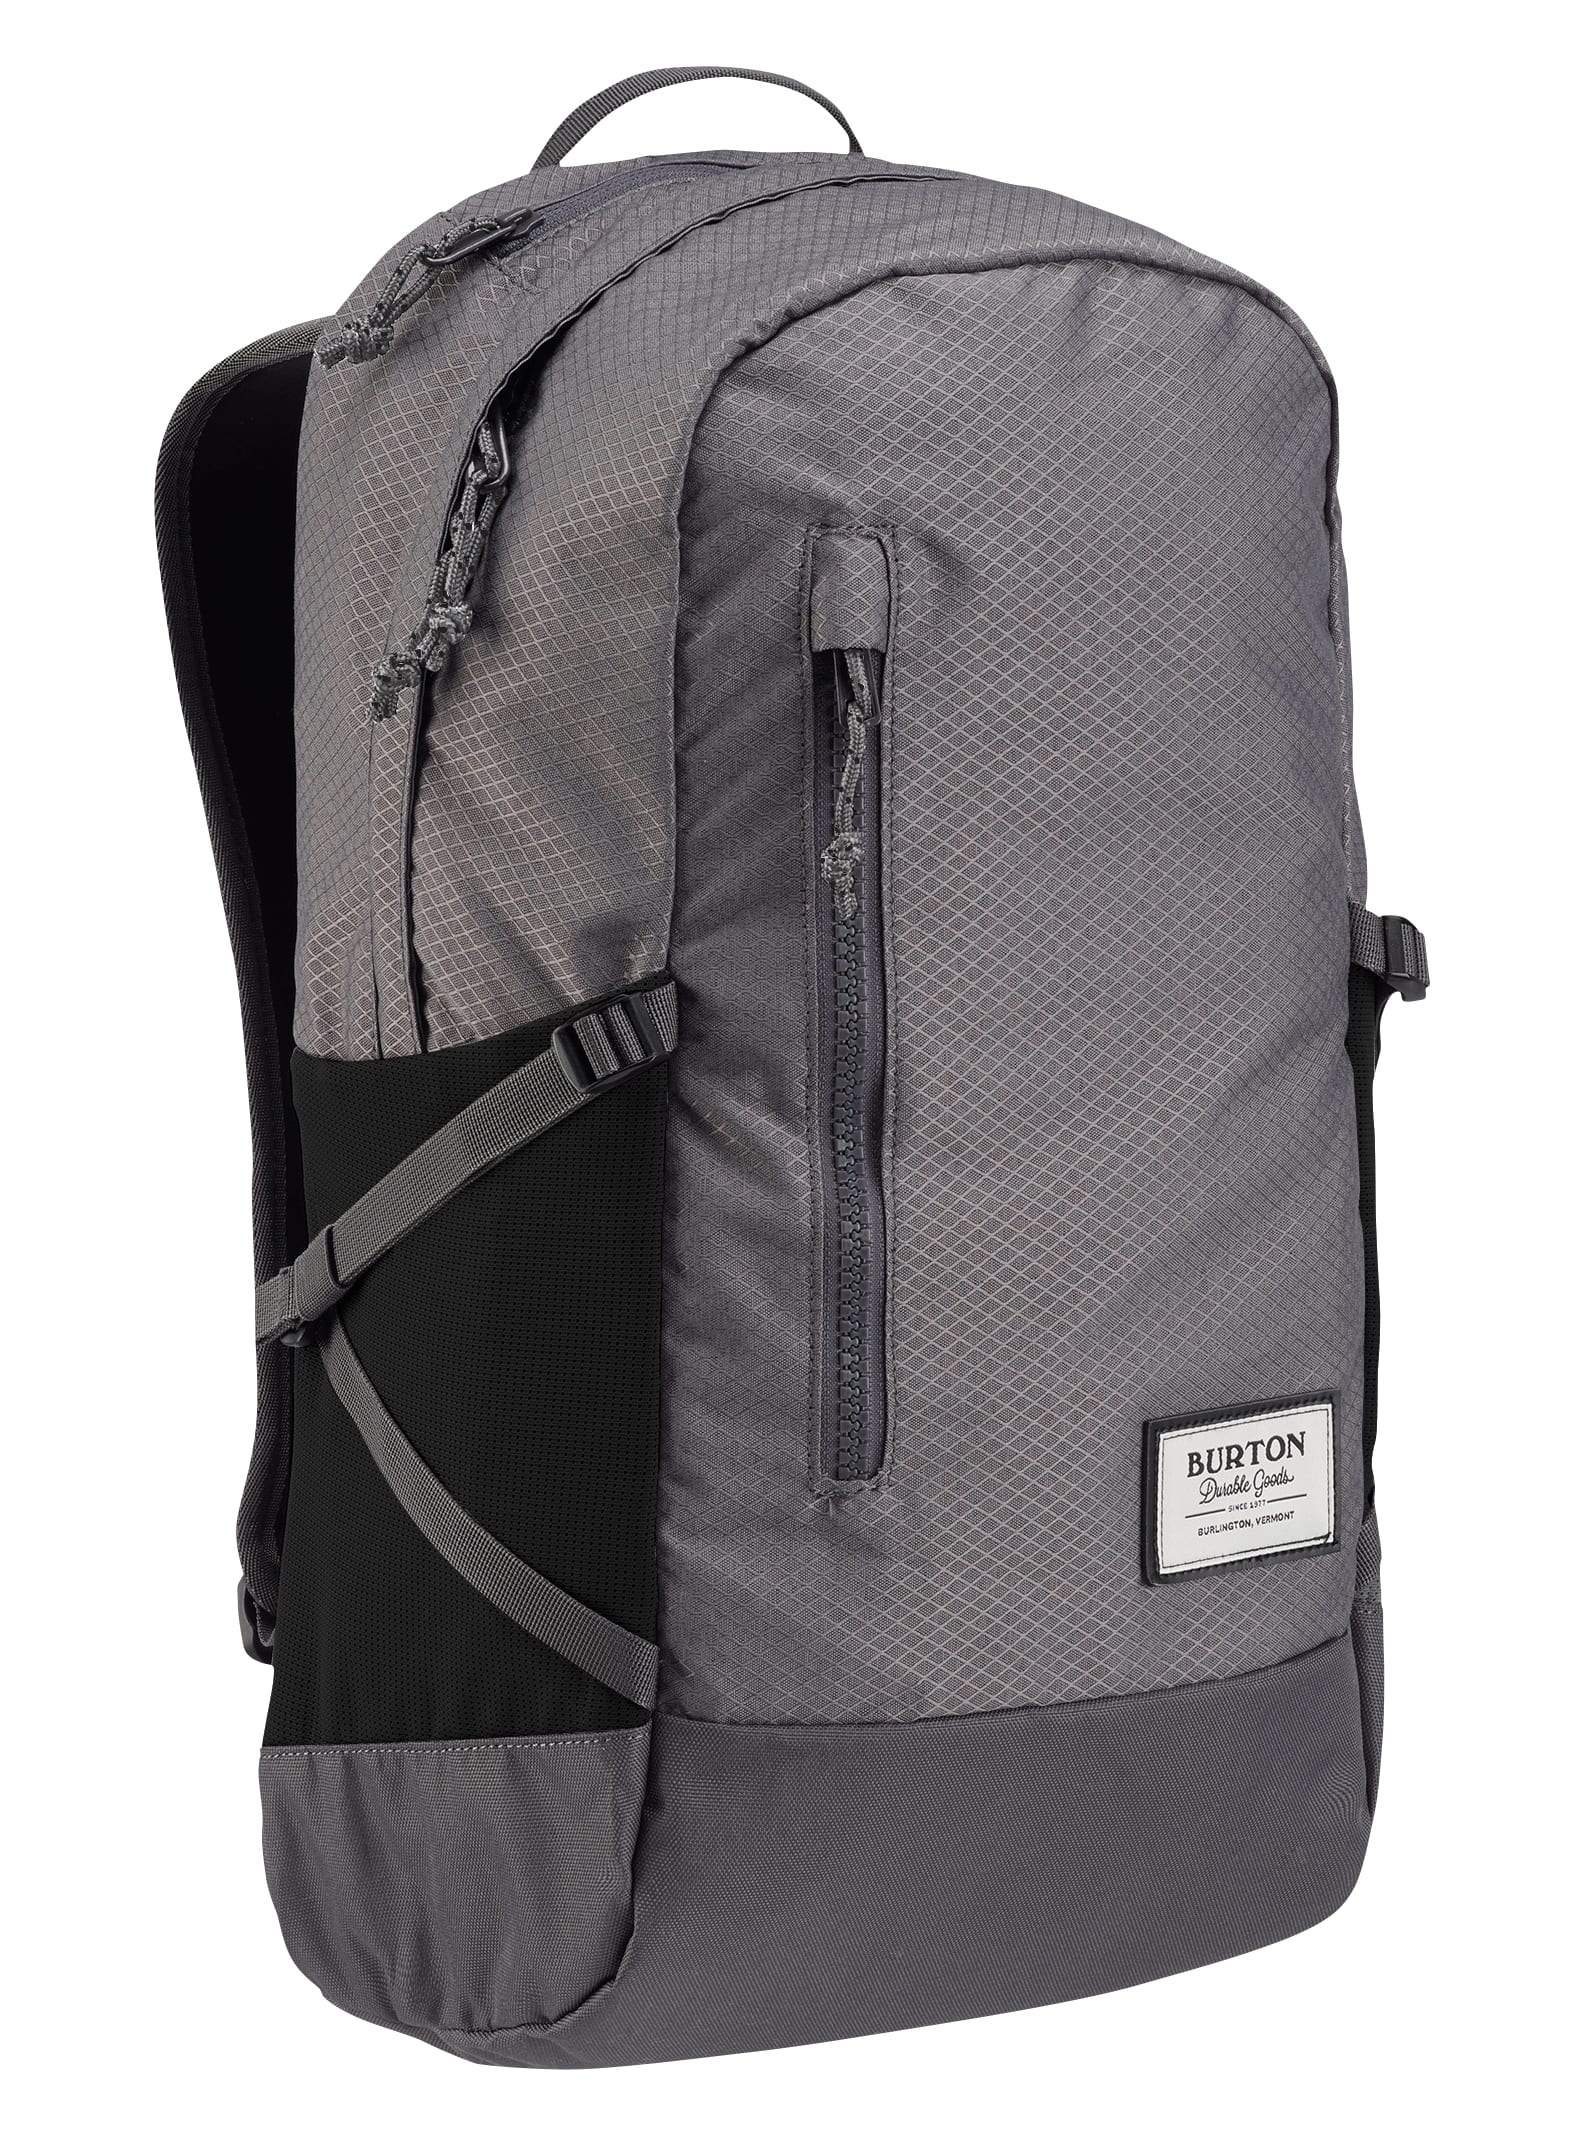 Burton Prospect Backpack | Burton.com Fall 2019 LU